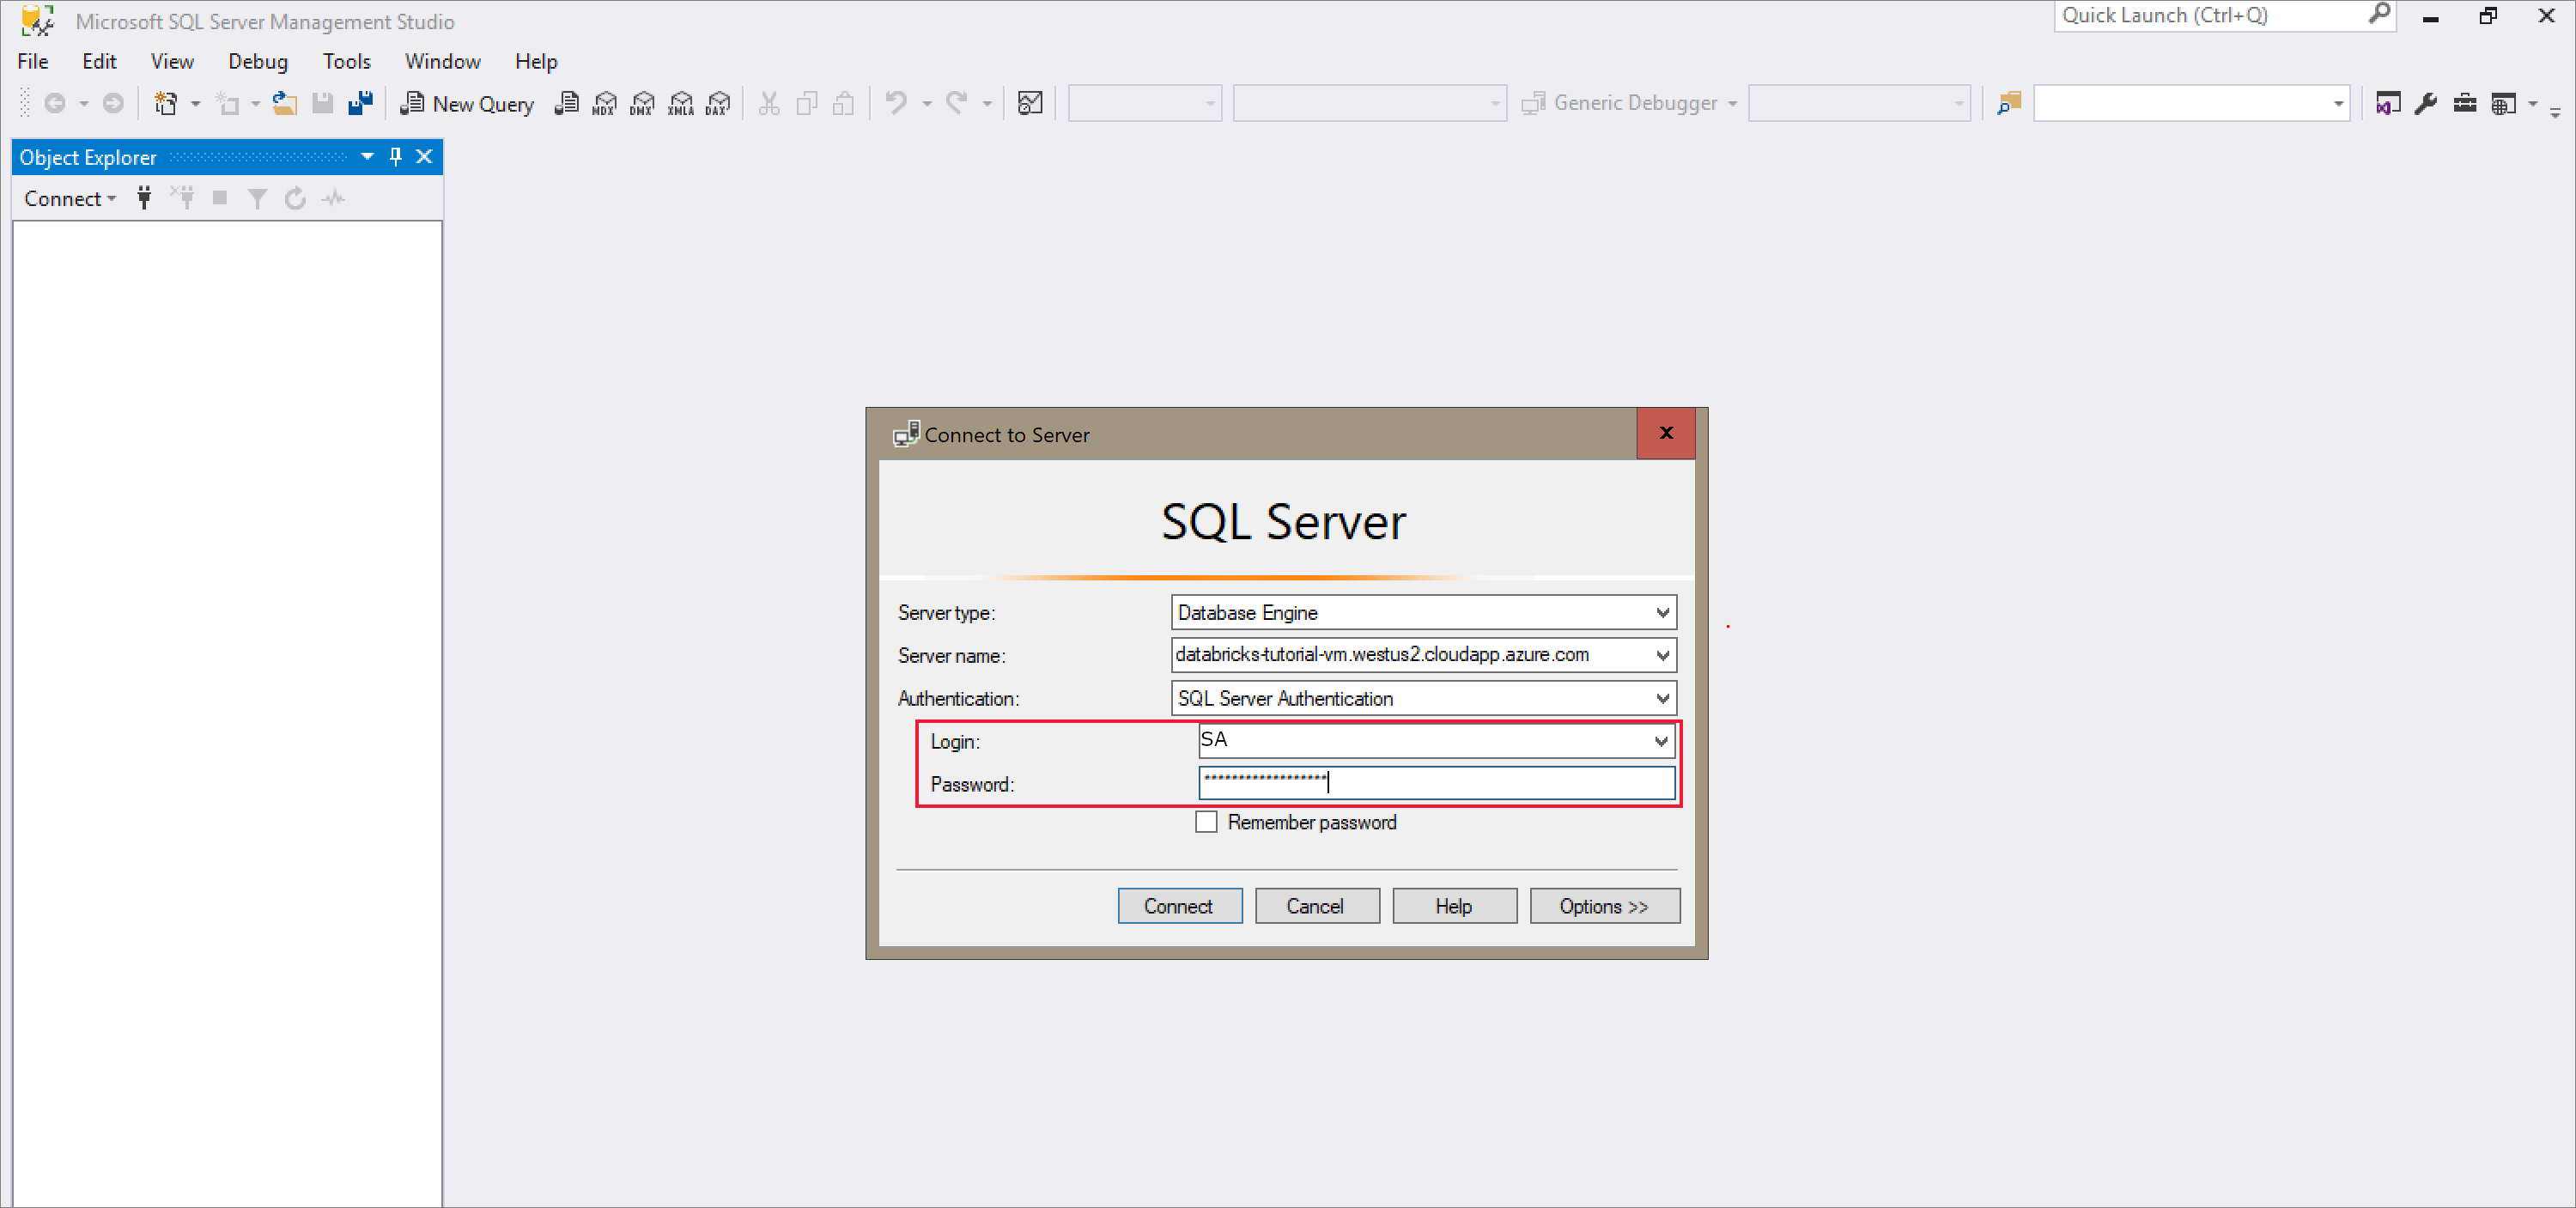 Connect to SQL Server using SQL Server Management Studio